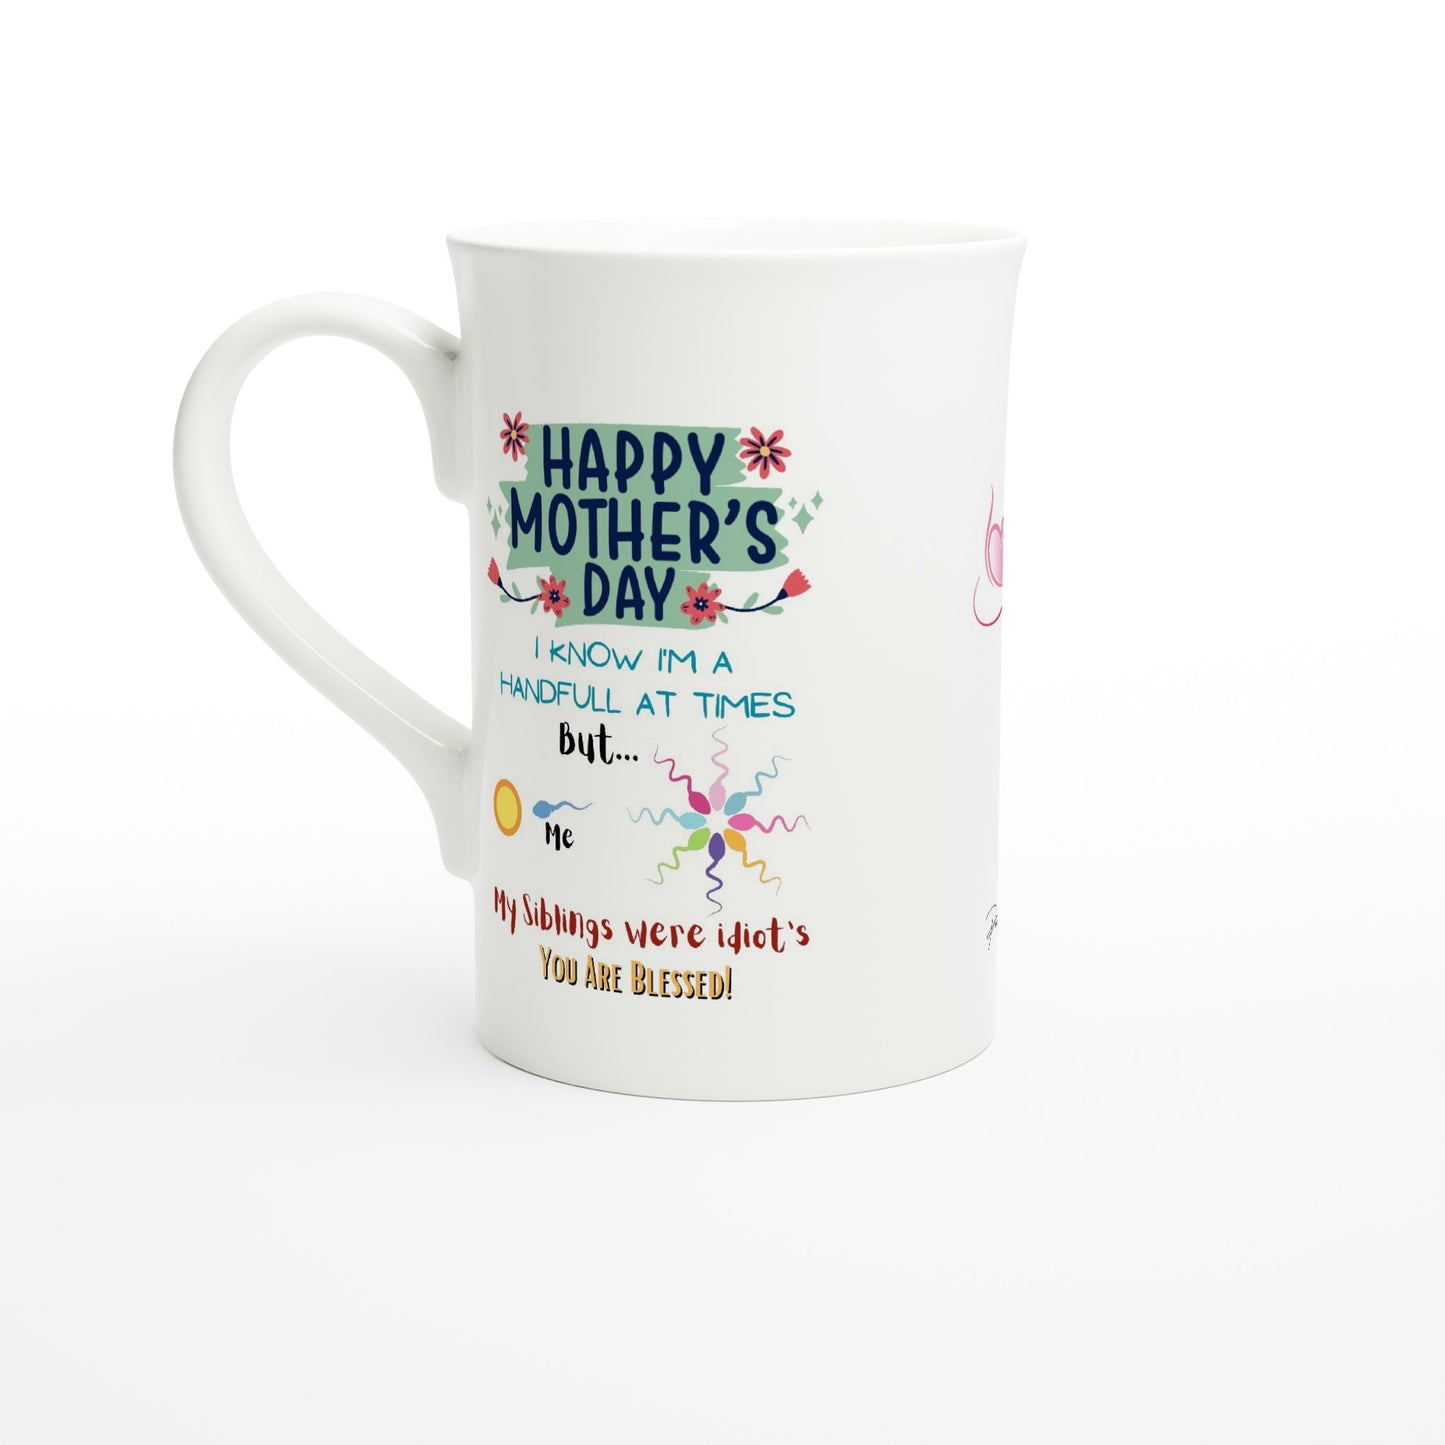 Mothers day, Siblings are stupid : White 10oz Porcelain Slim Mug